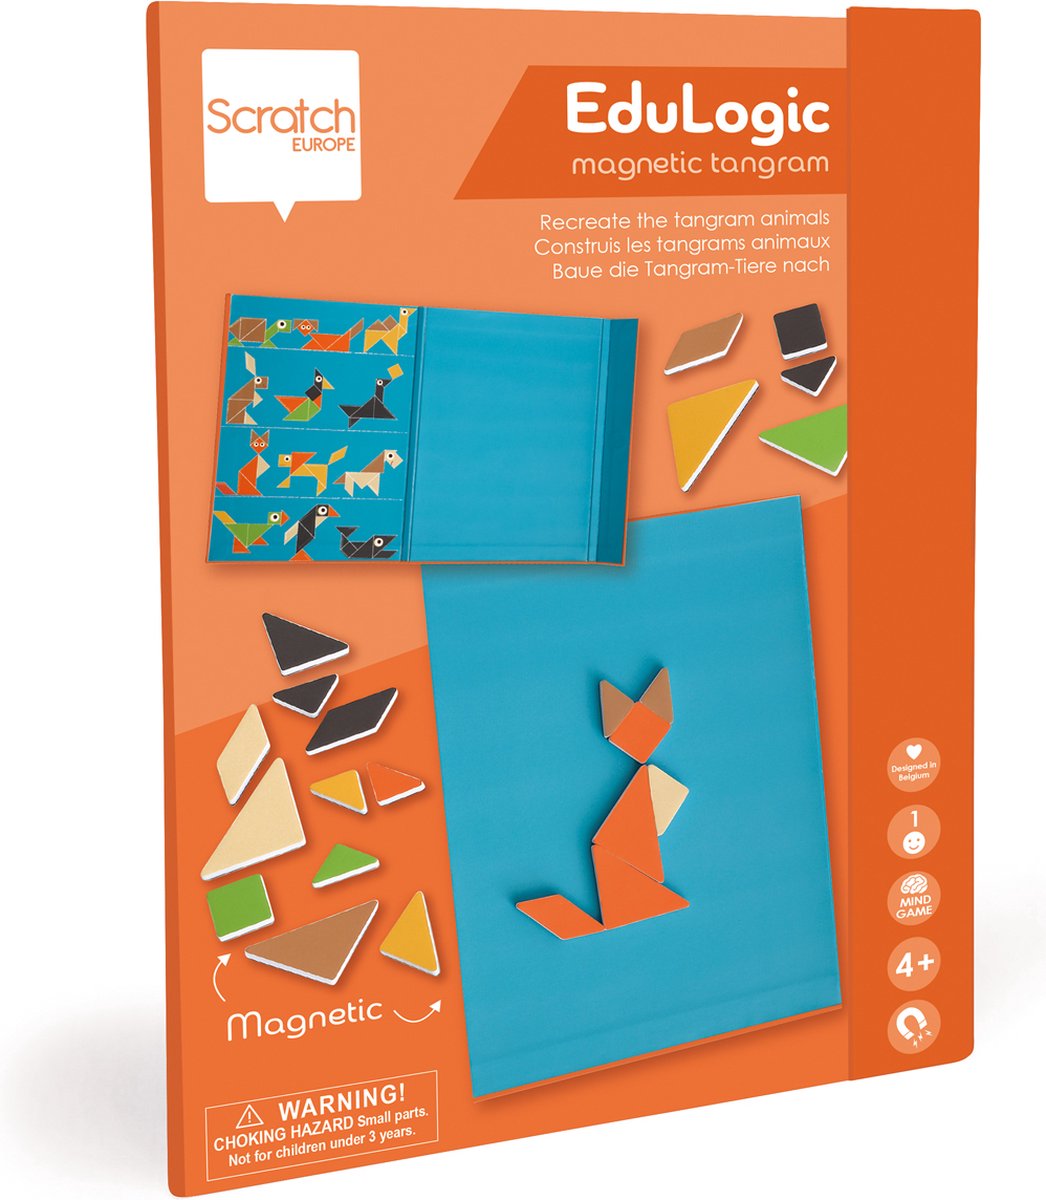 Scratch EduLogic Book: TANGRAM DIEREN 18,2x25,6x1,3cm (gesloten), 51,5x25,6x1cm (open), magnetisch, 4+